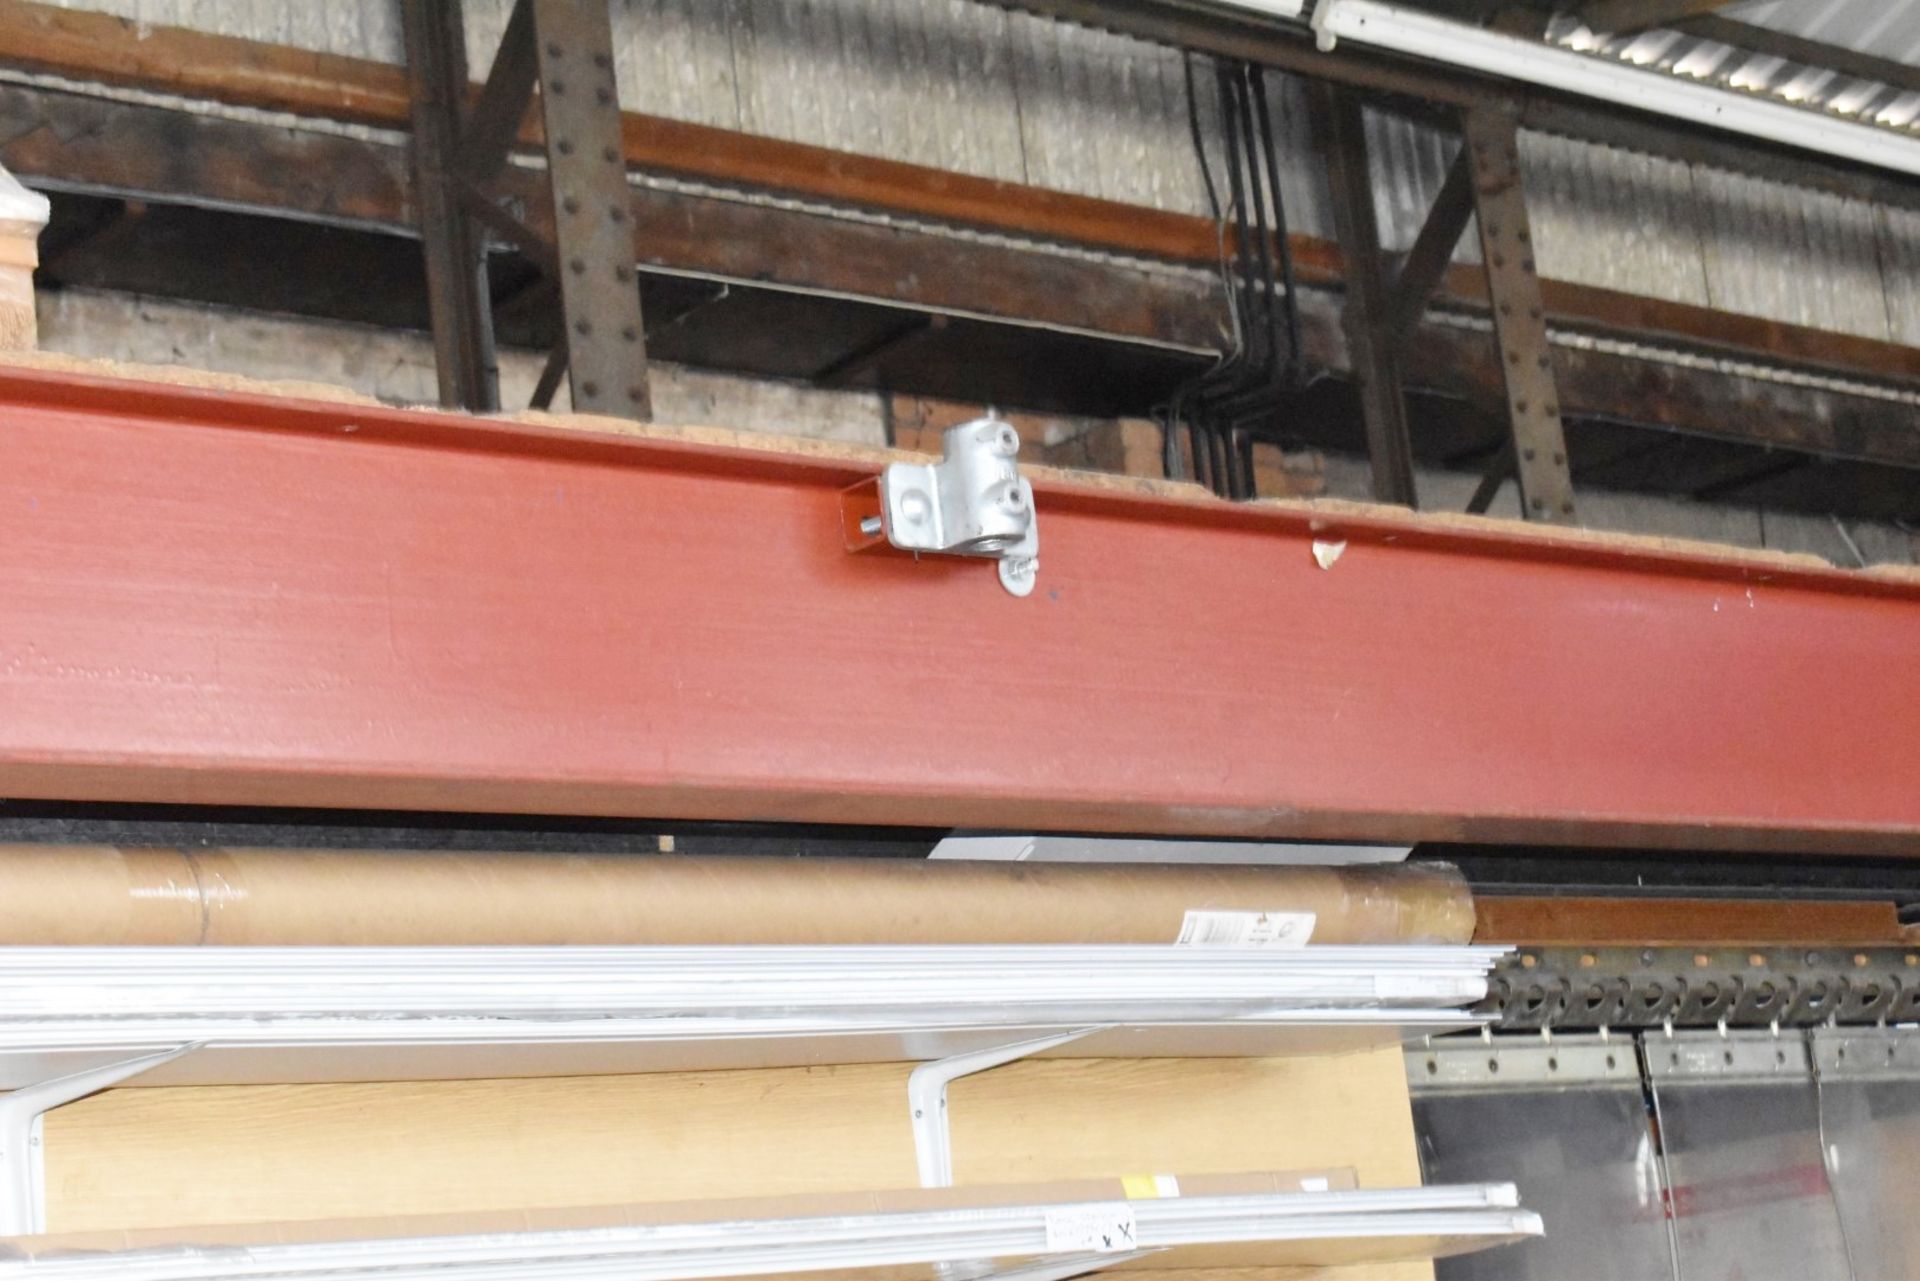 1 x Mezzanine Floor - Heavy Duty Steel Construction With Access Ladder - Size: W1000 x D325 cms - Image 16 of 18